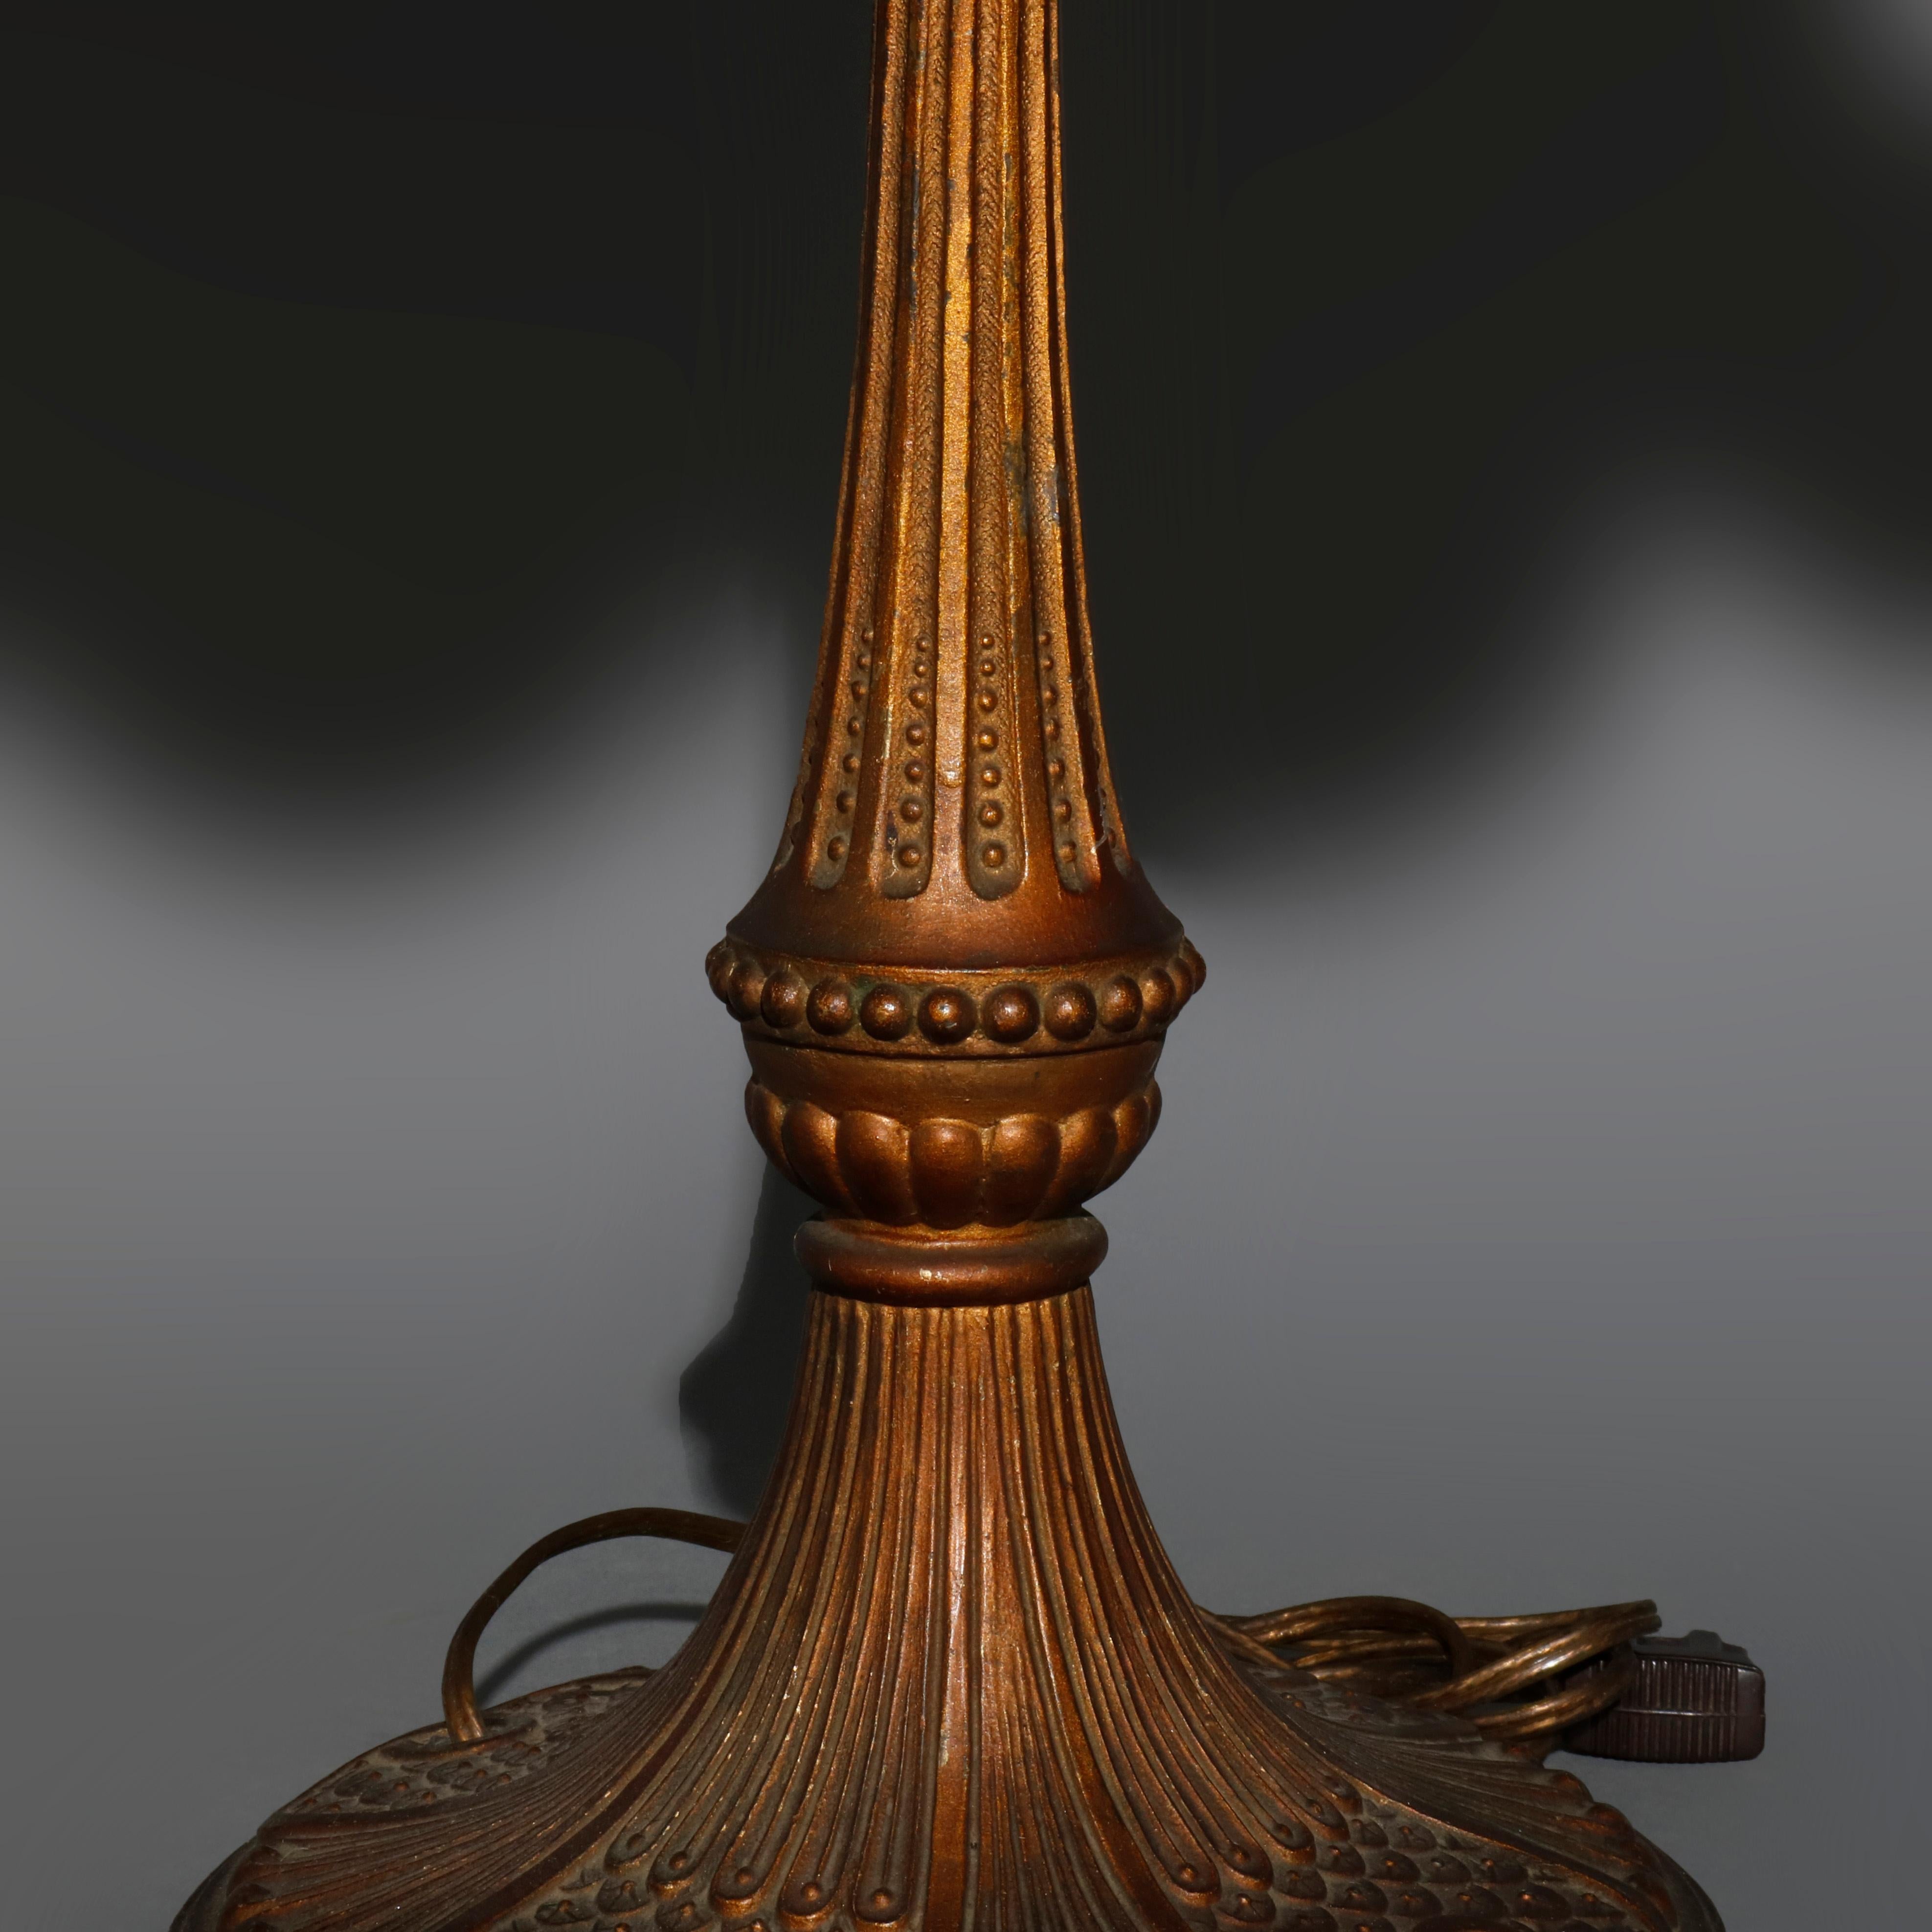 Metal Arts & Crafts Bradley & Hubbard Slag Glass Oval Panel Table Lamp, circa 1920